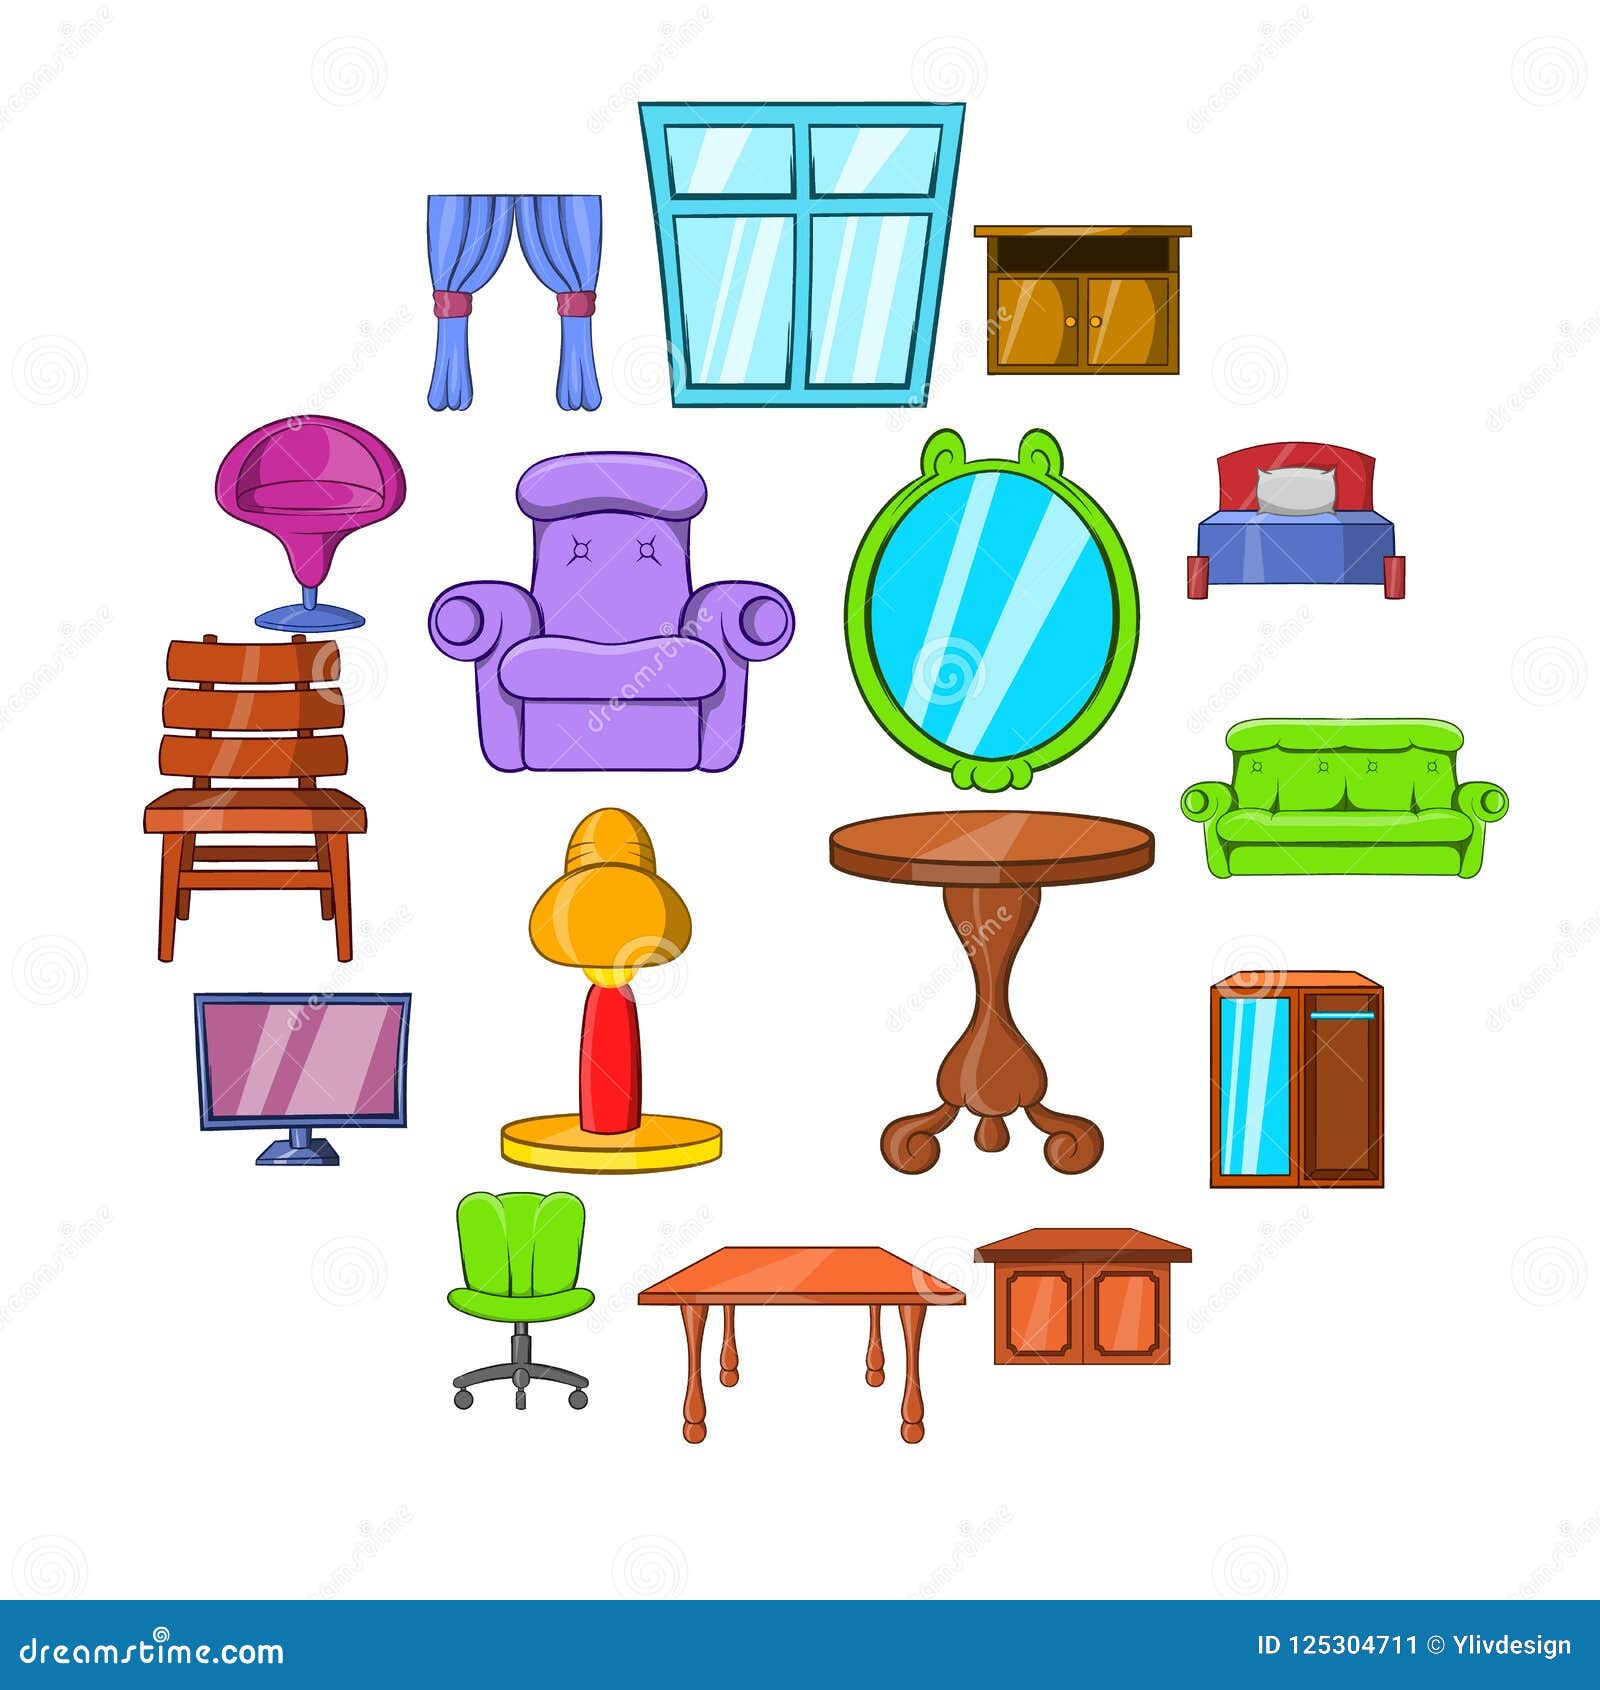 Furniture icons set stock illustration. Illustration of furniture ...